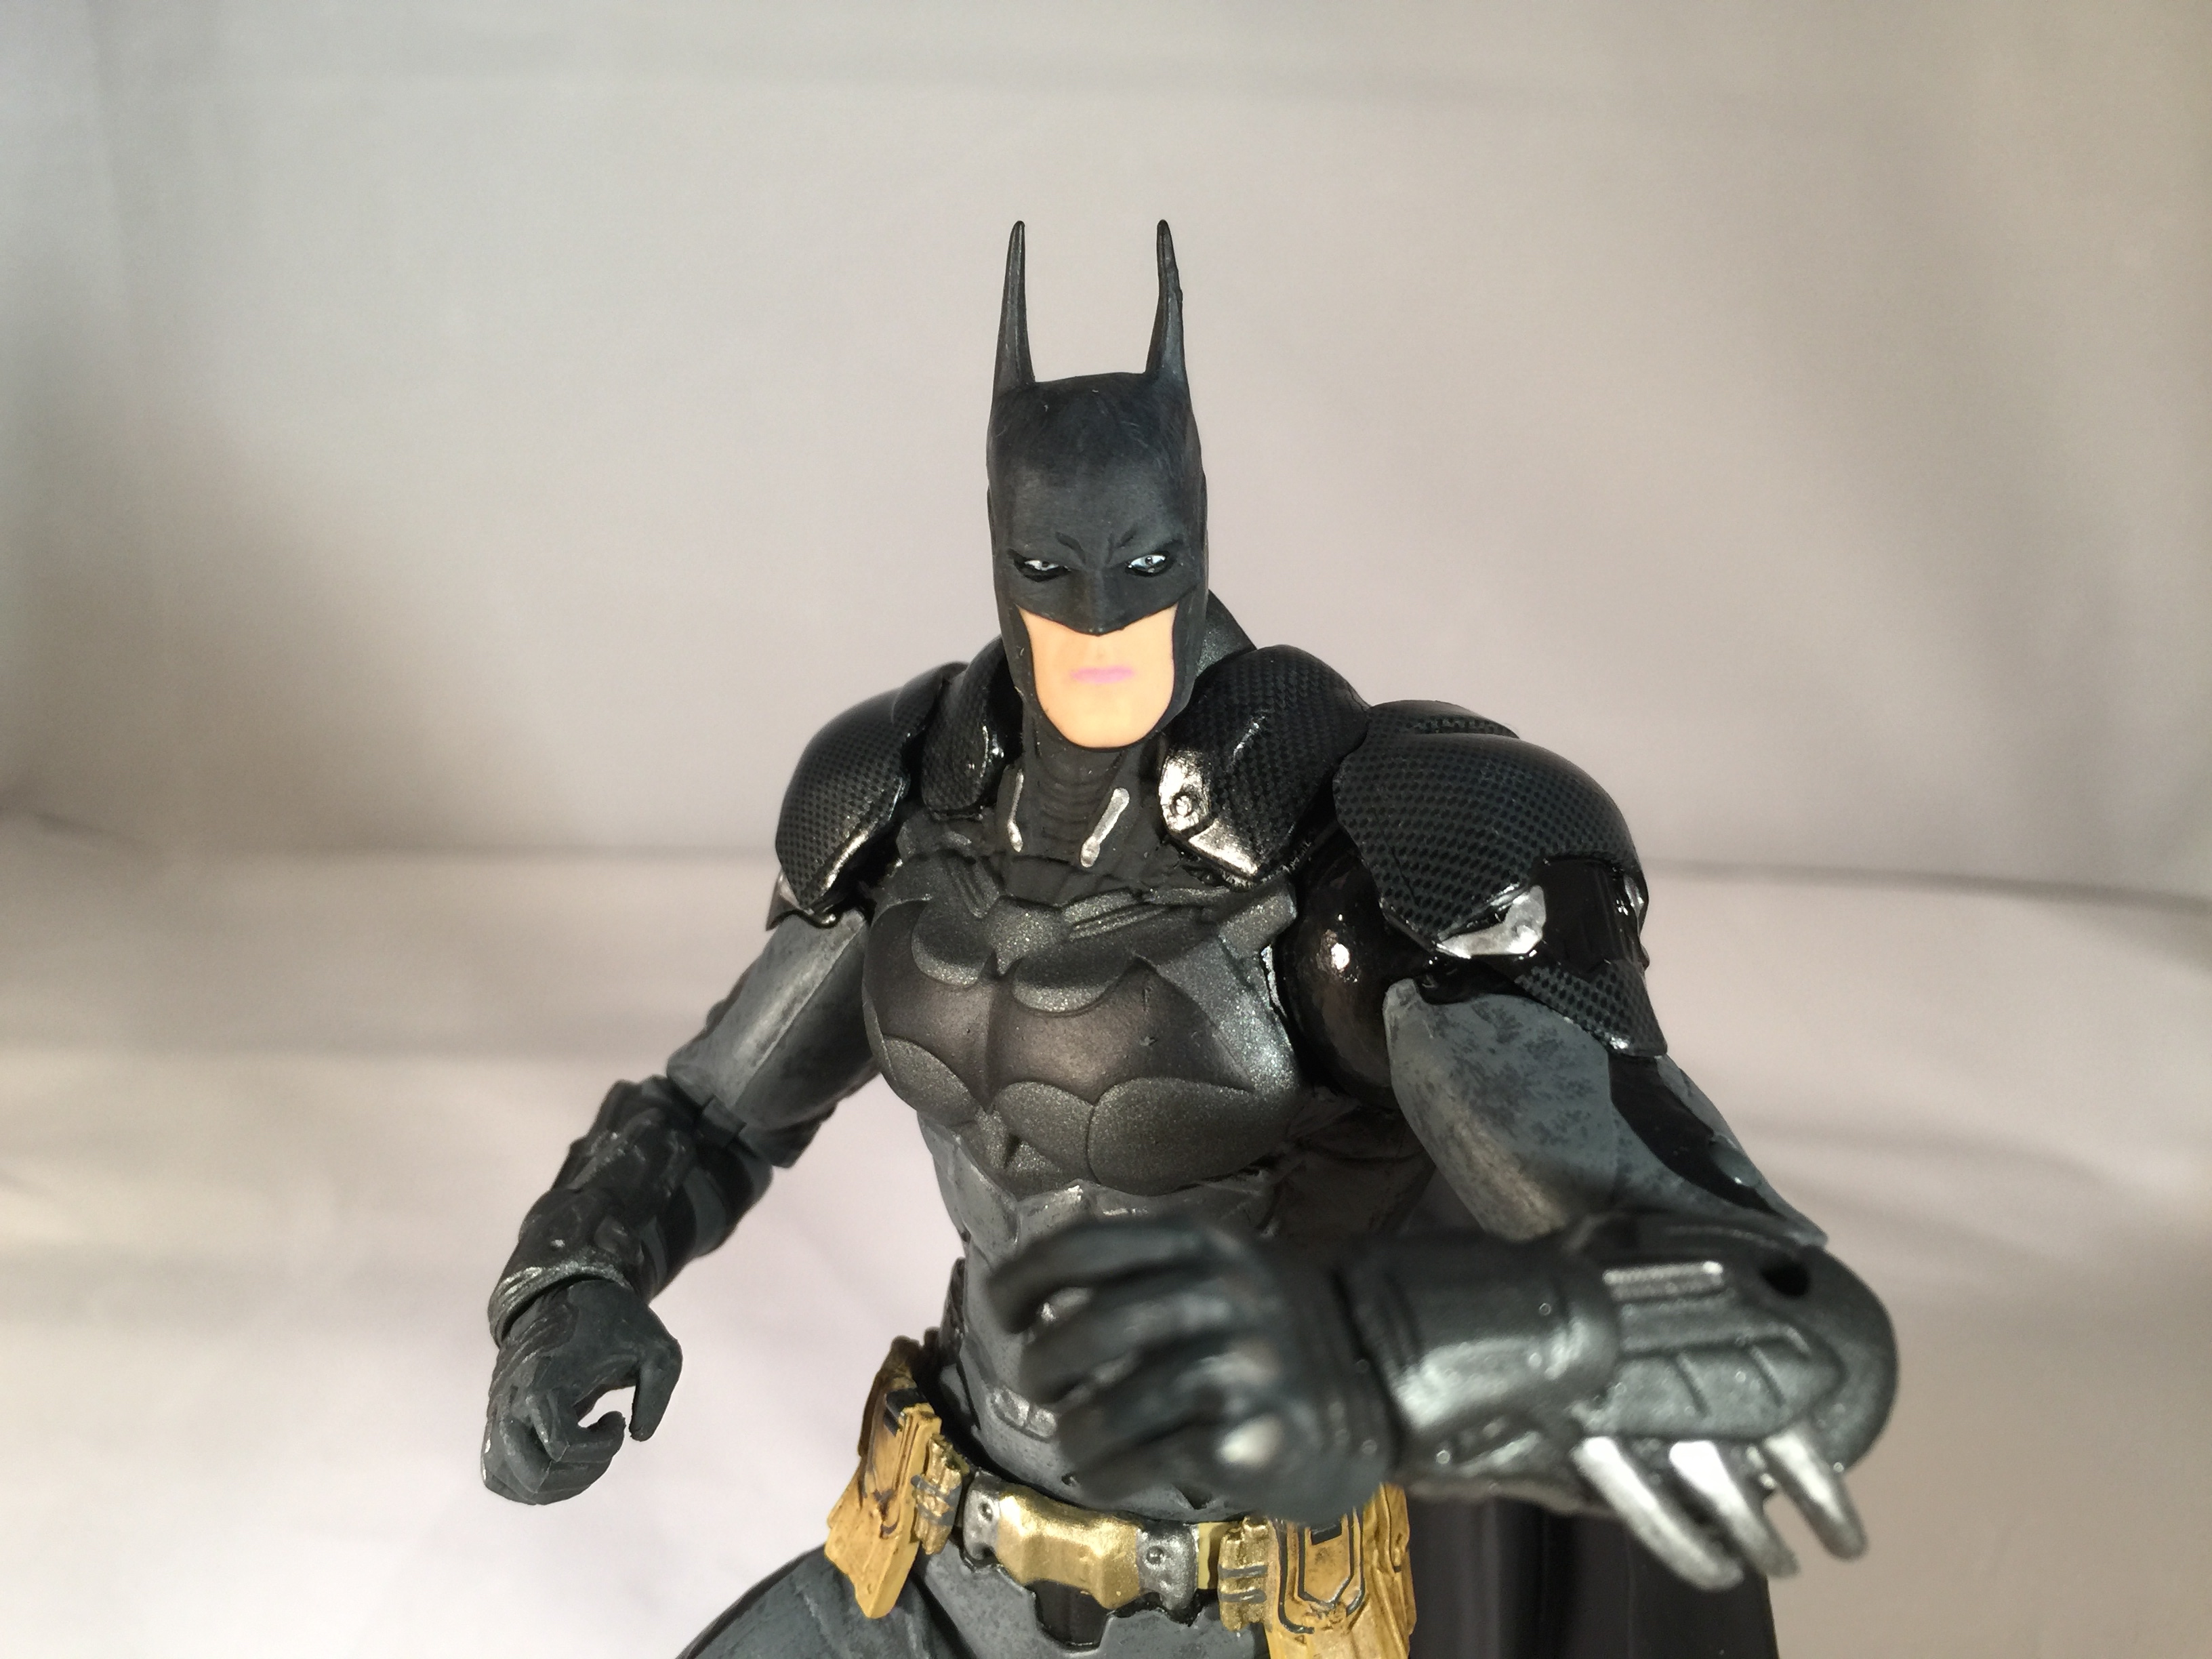 batman arkham city figure